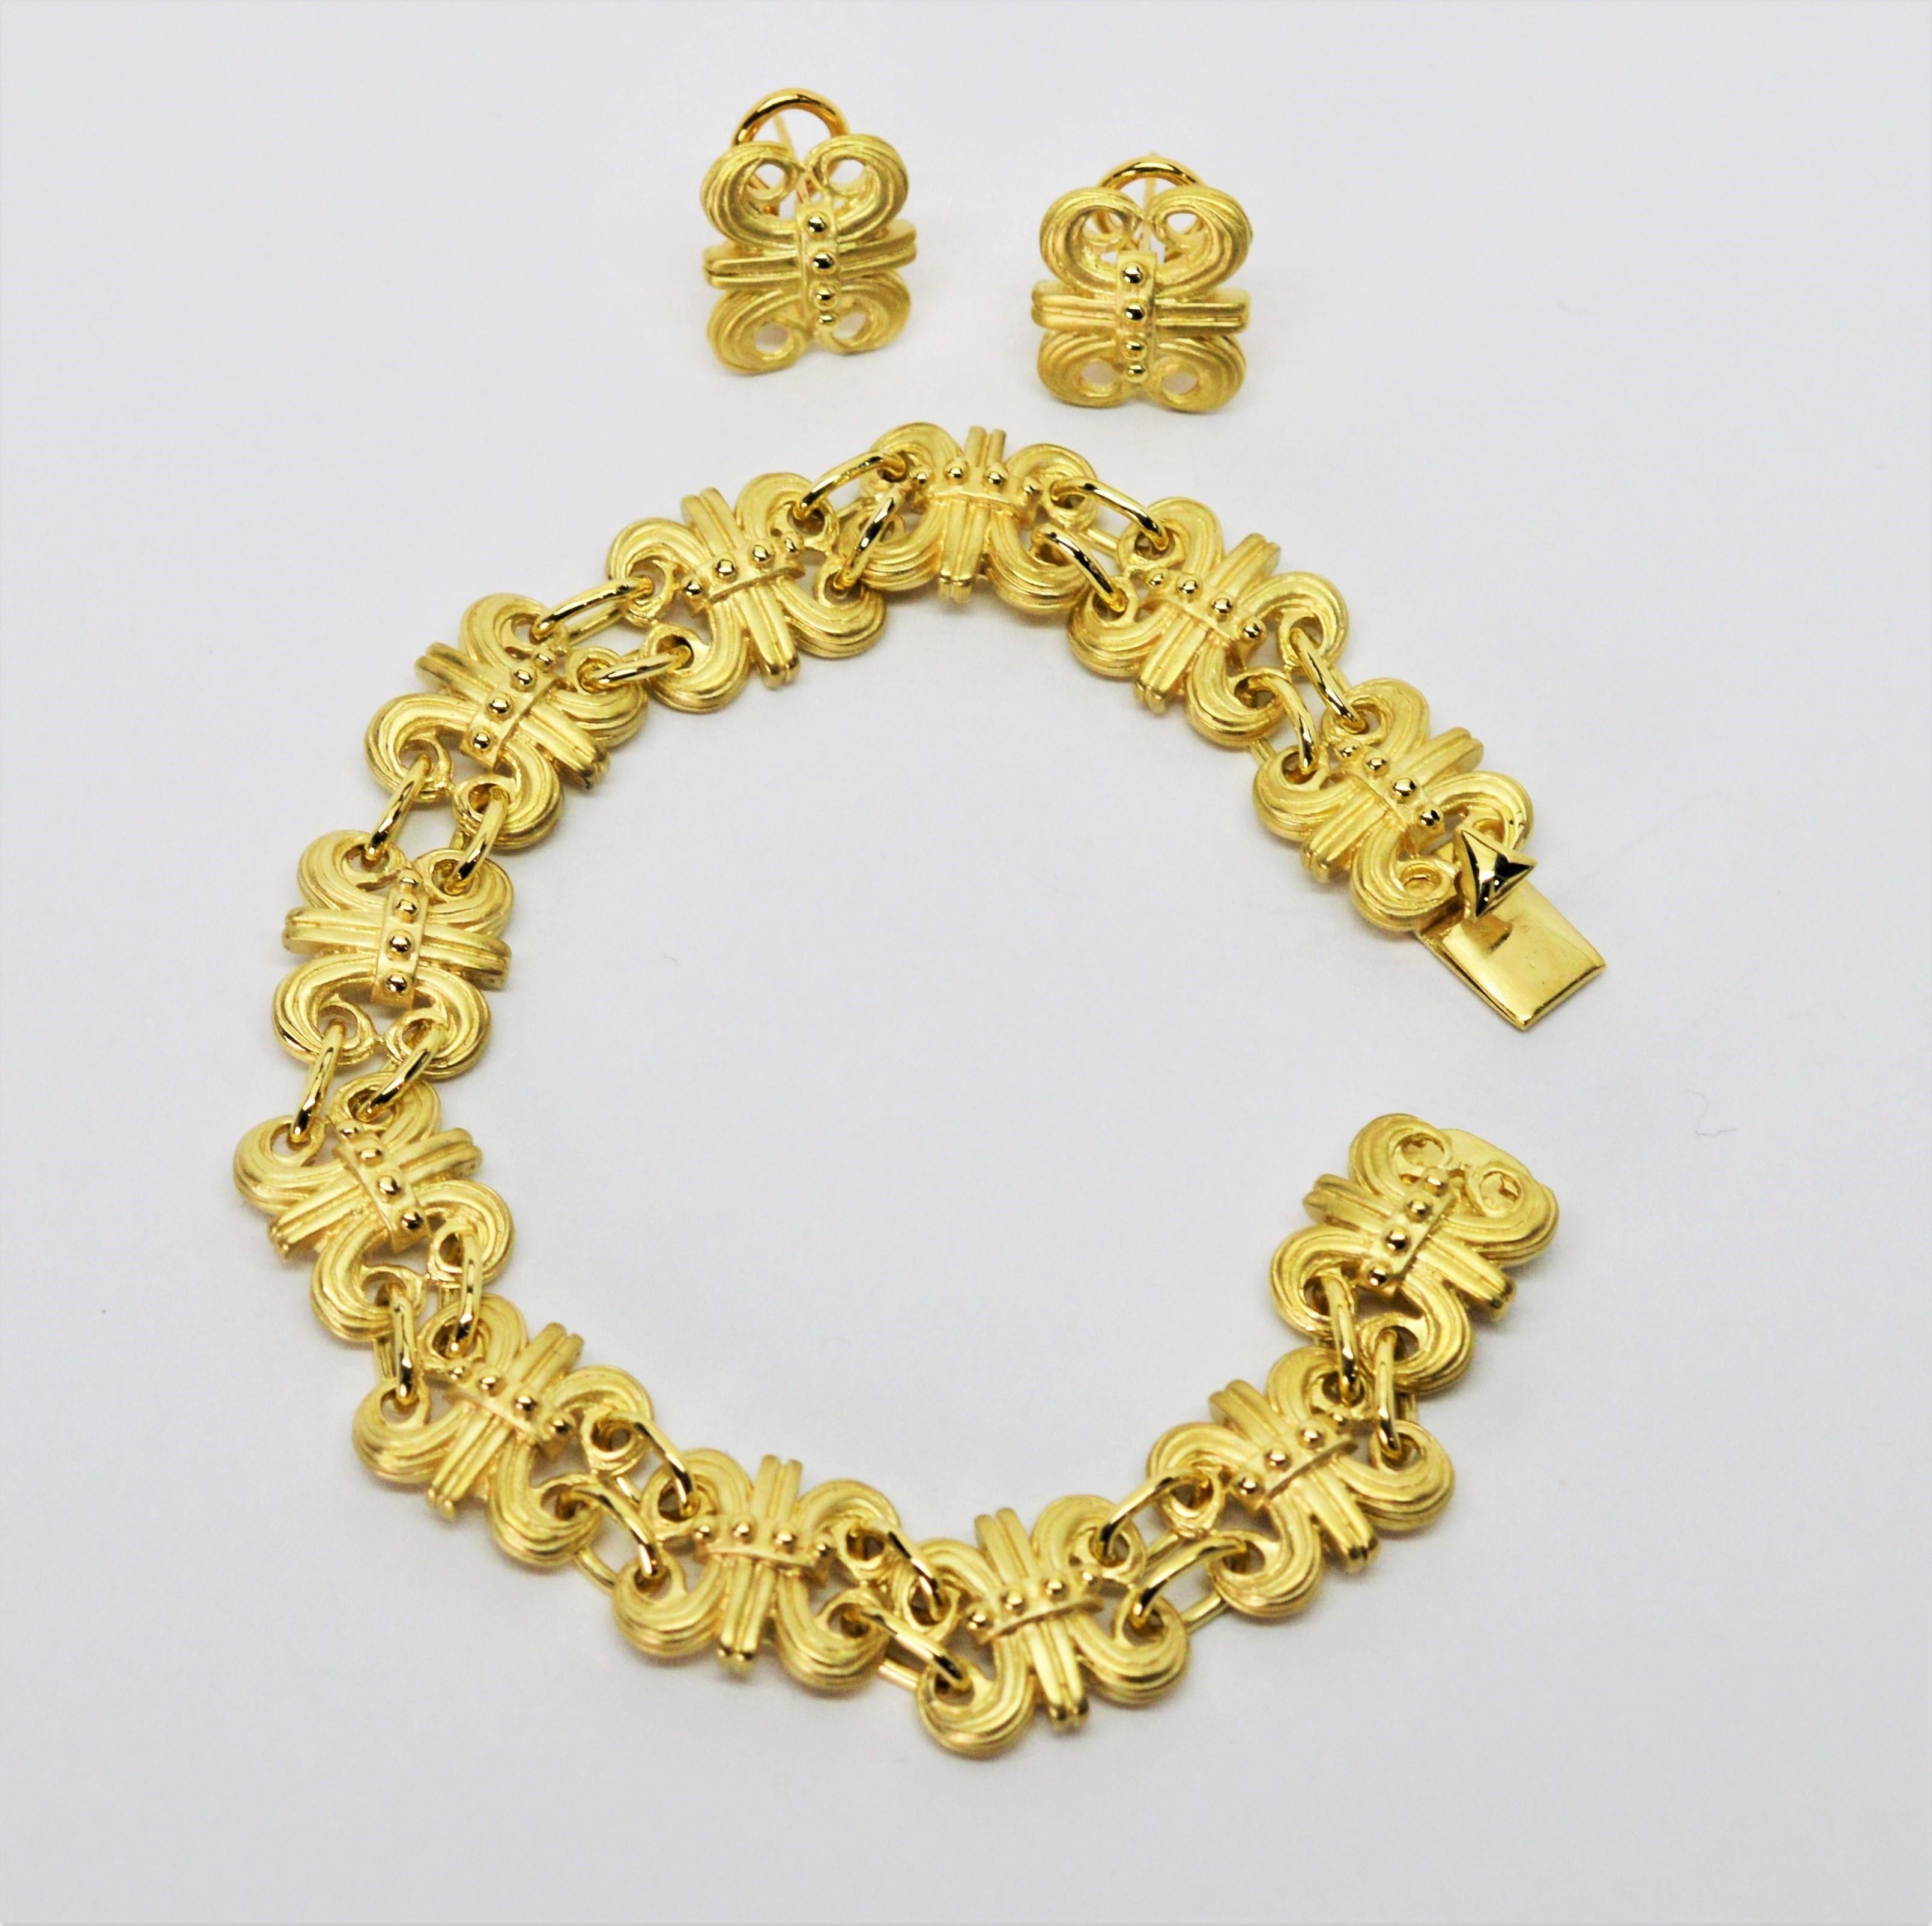 Satin 14 Karat Gold Fleur-de-Lis Bracelet and Earring Set In Excellent Condition For Sale In Mount Kisco, NY